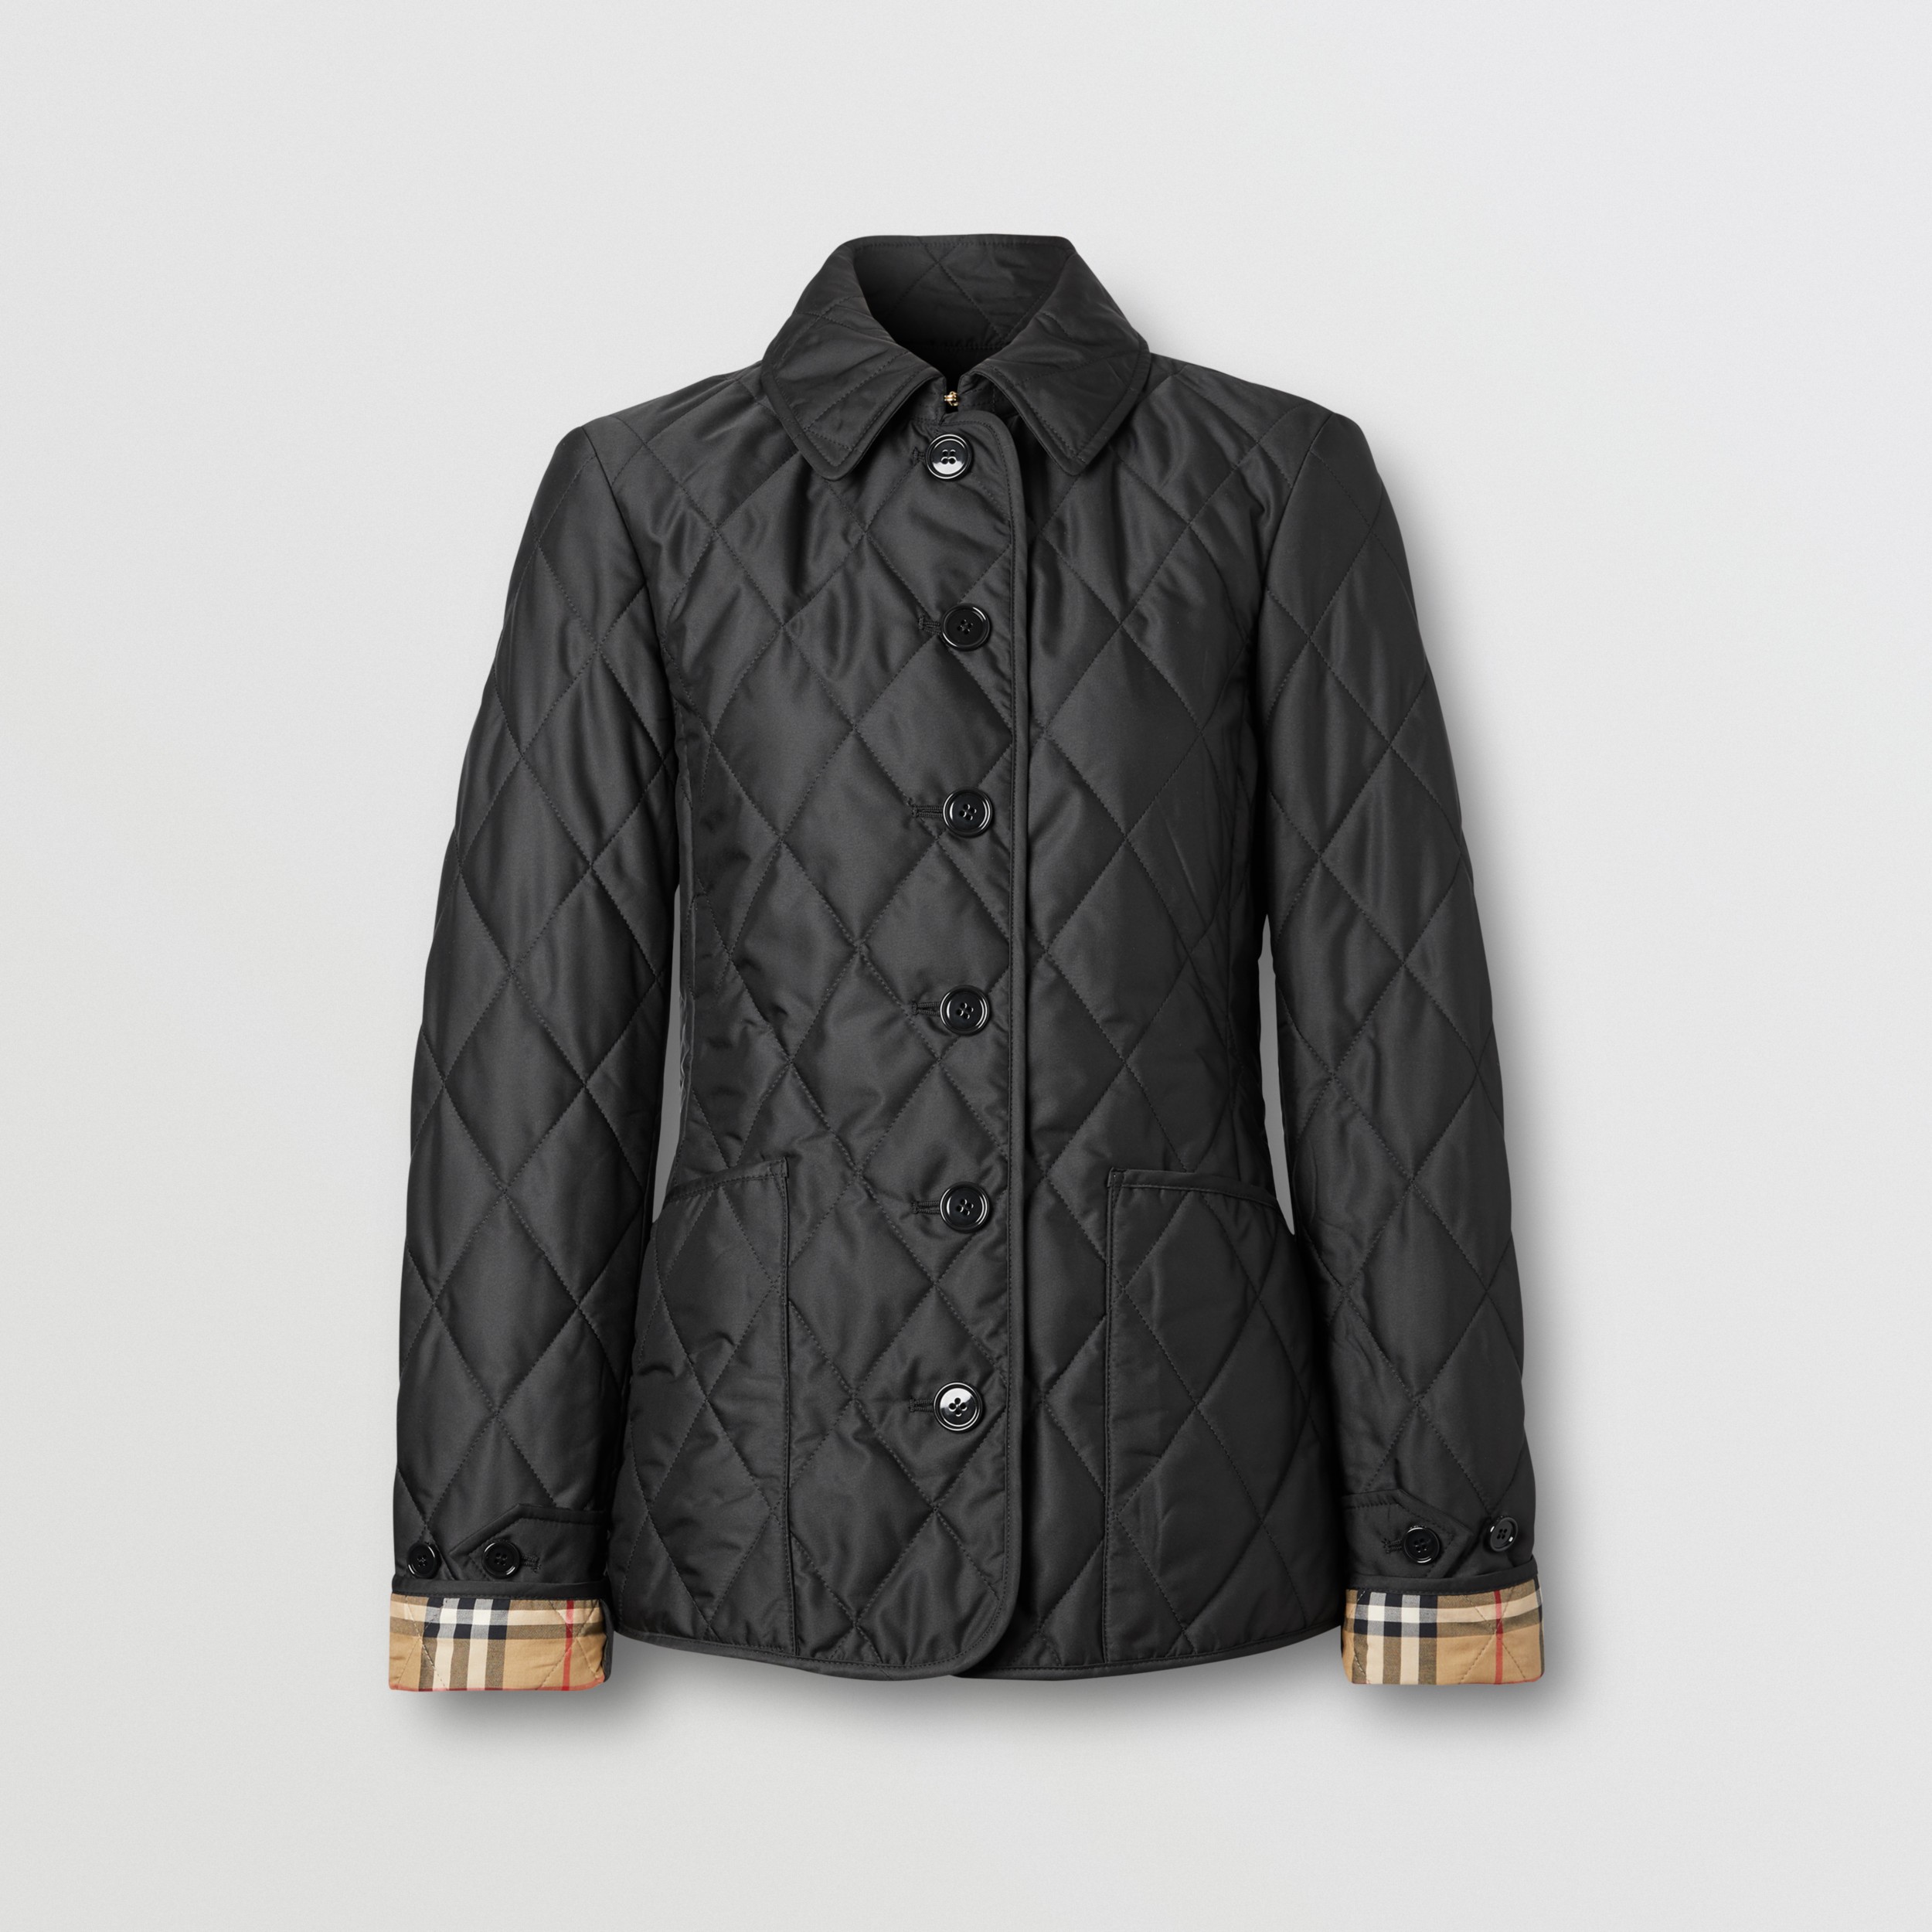 Arriba 39+ imagen burberry jacket on sale